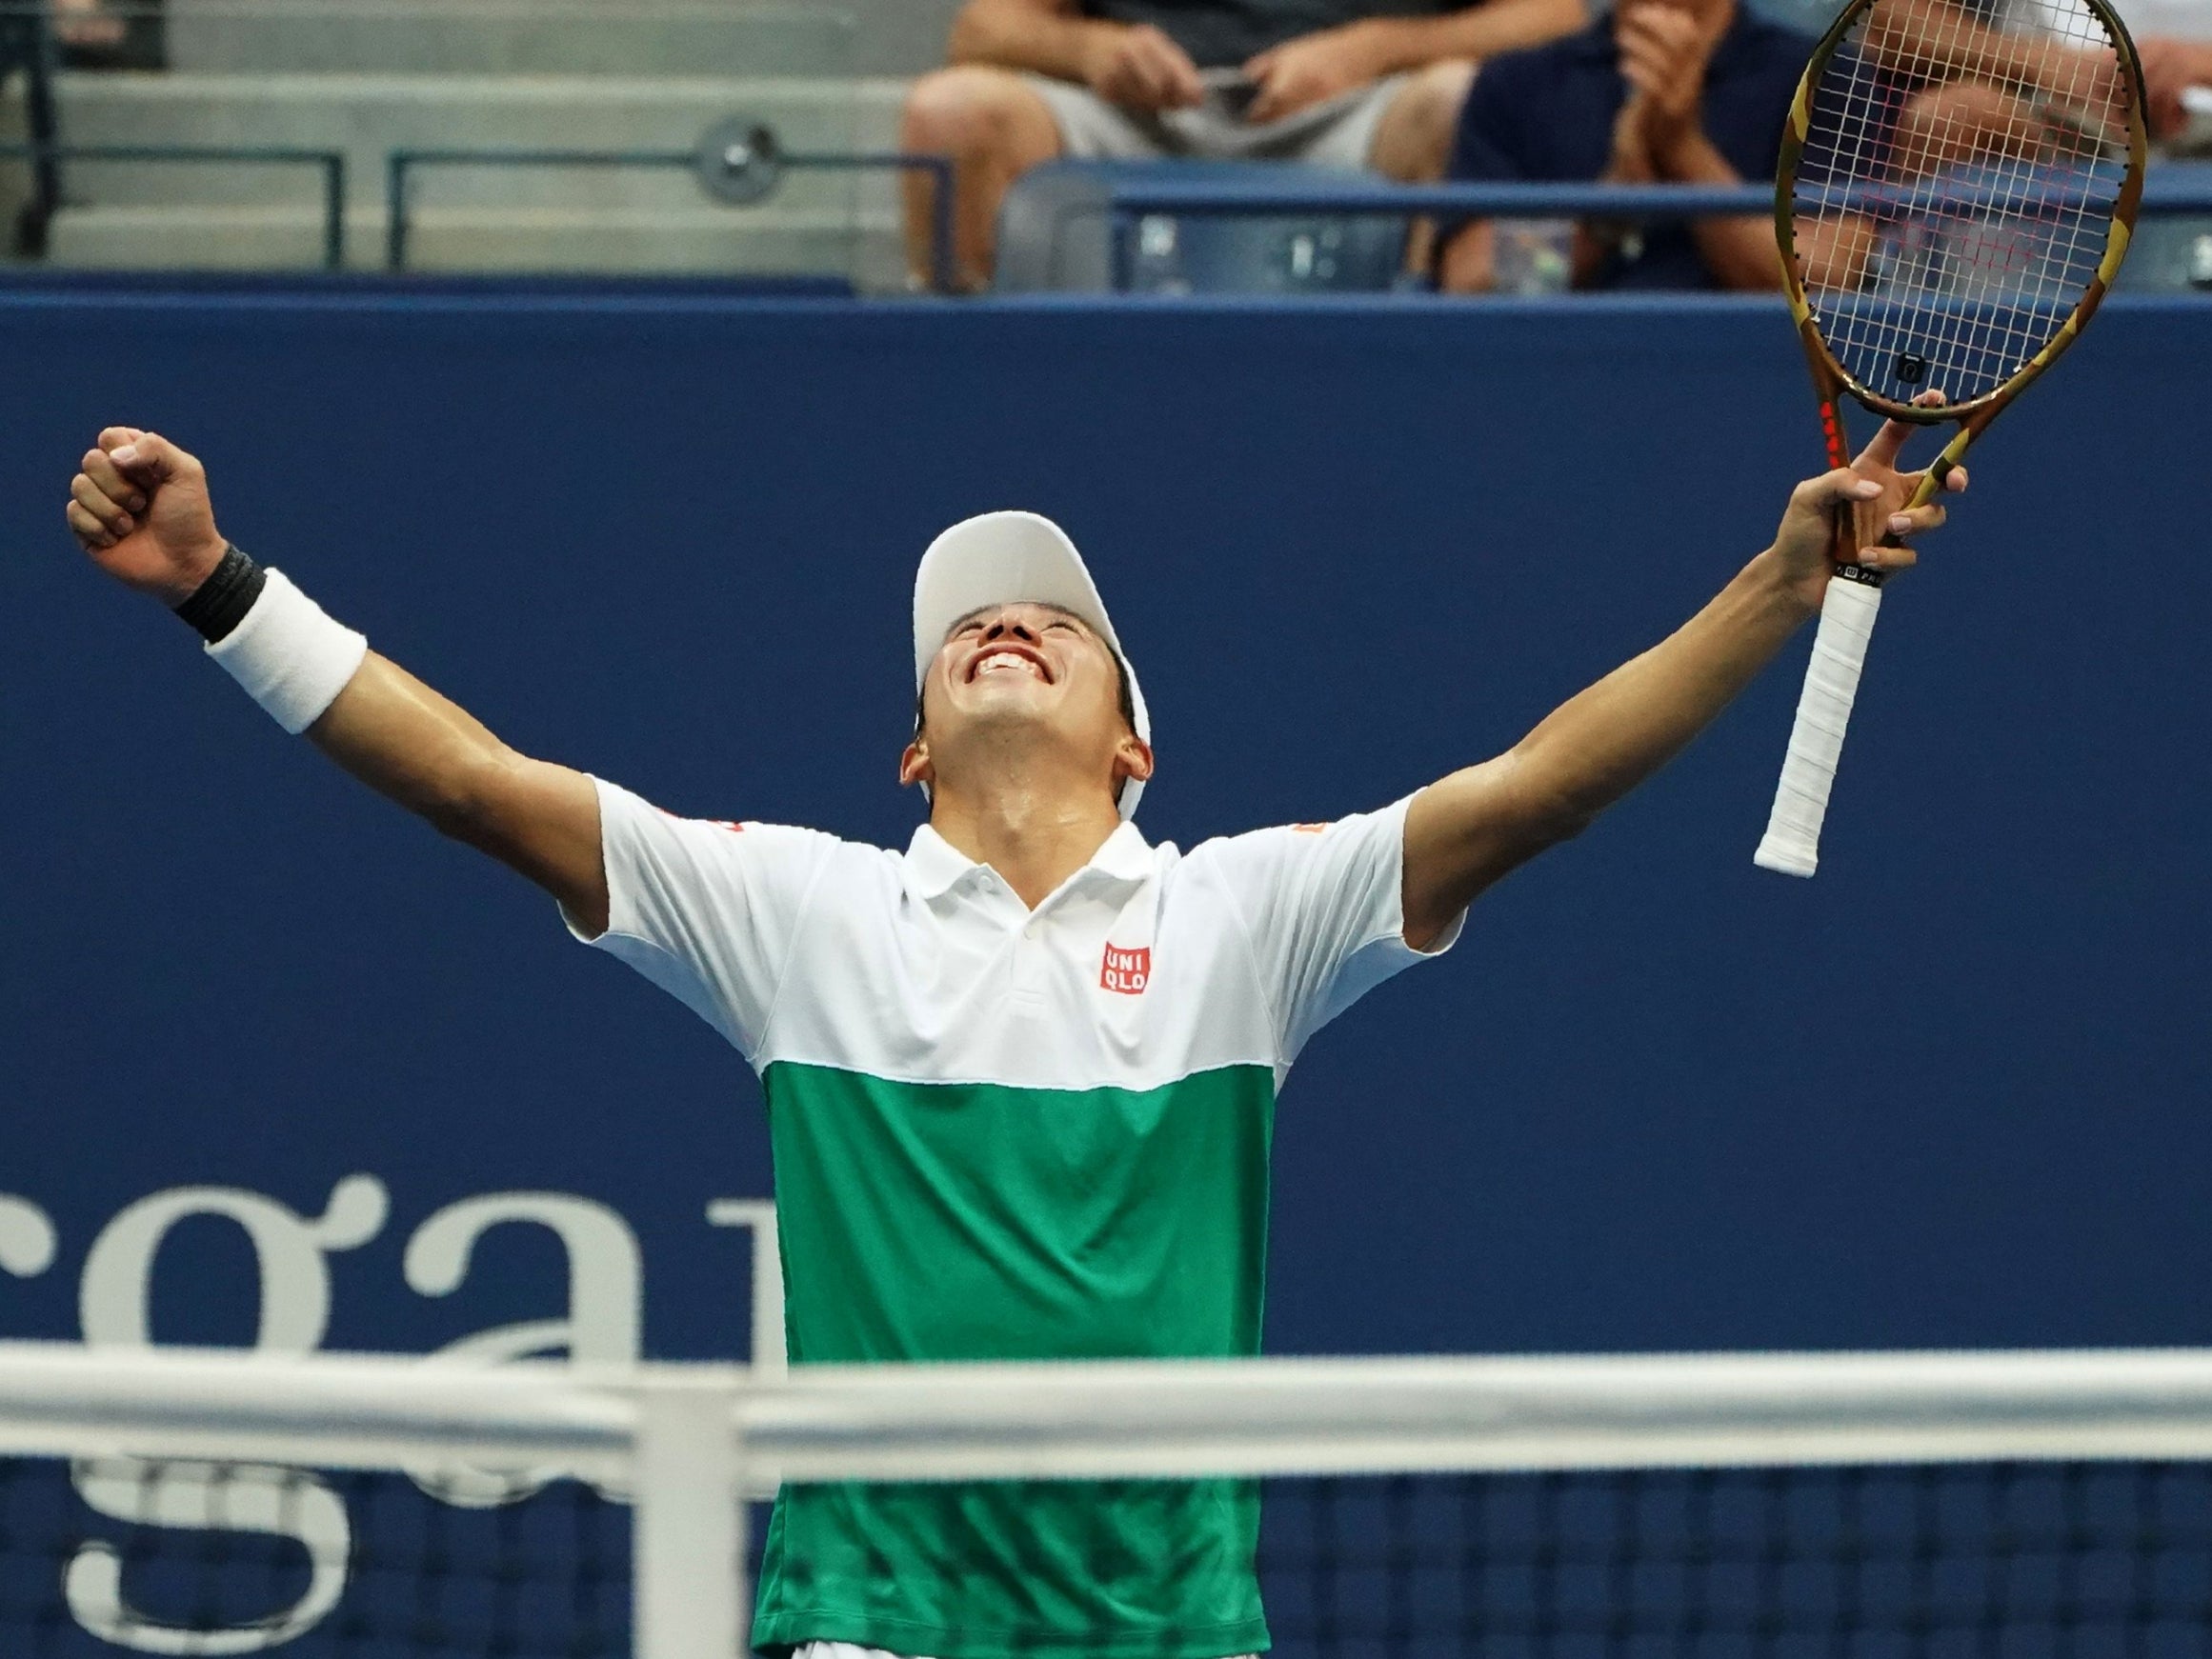 Kei Nishikori celebrates after defeating Marin Cilic